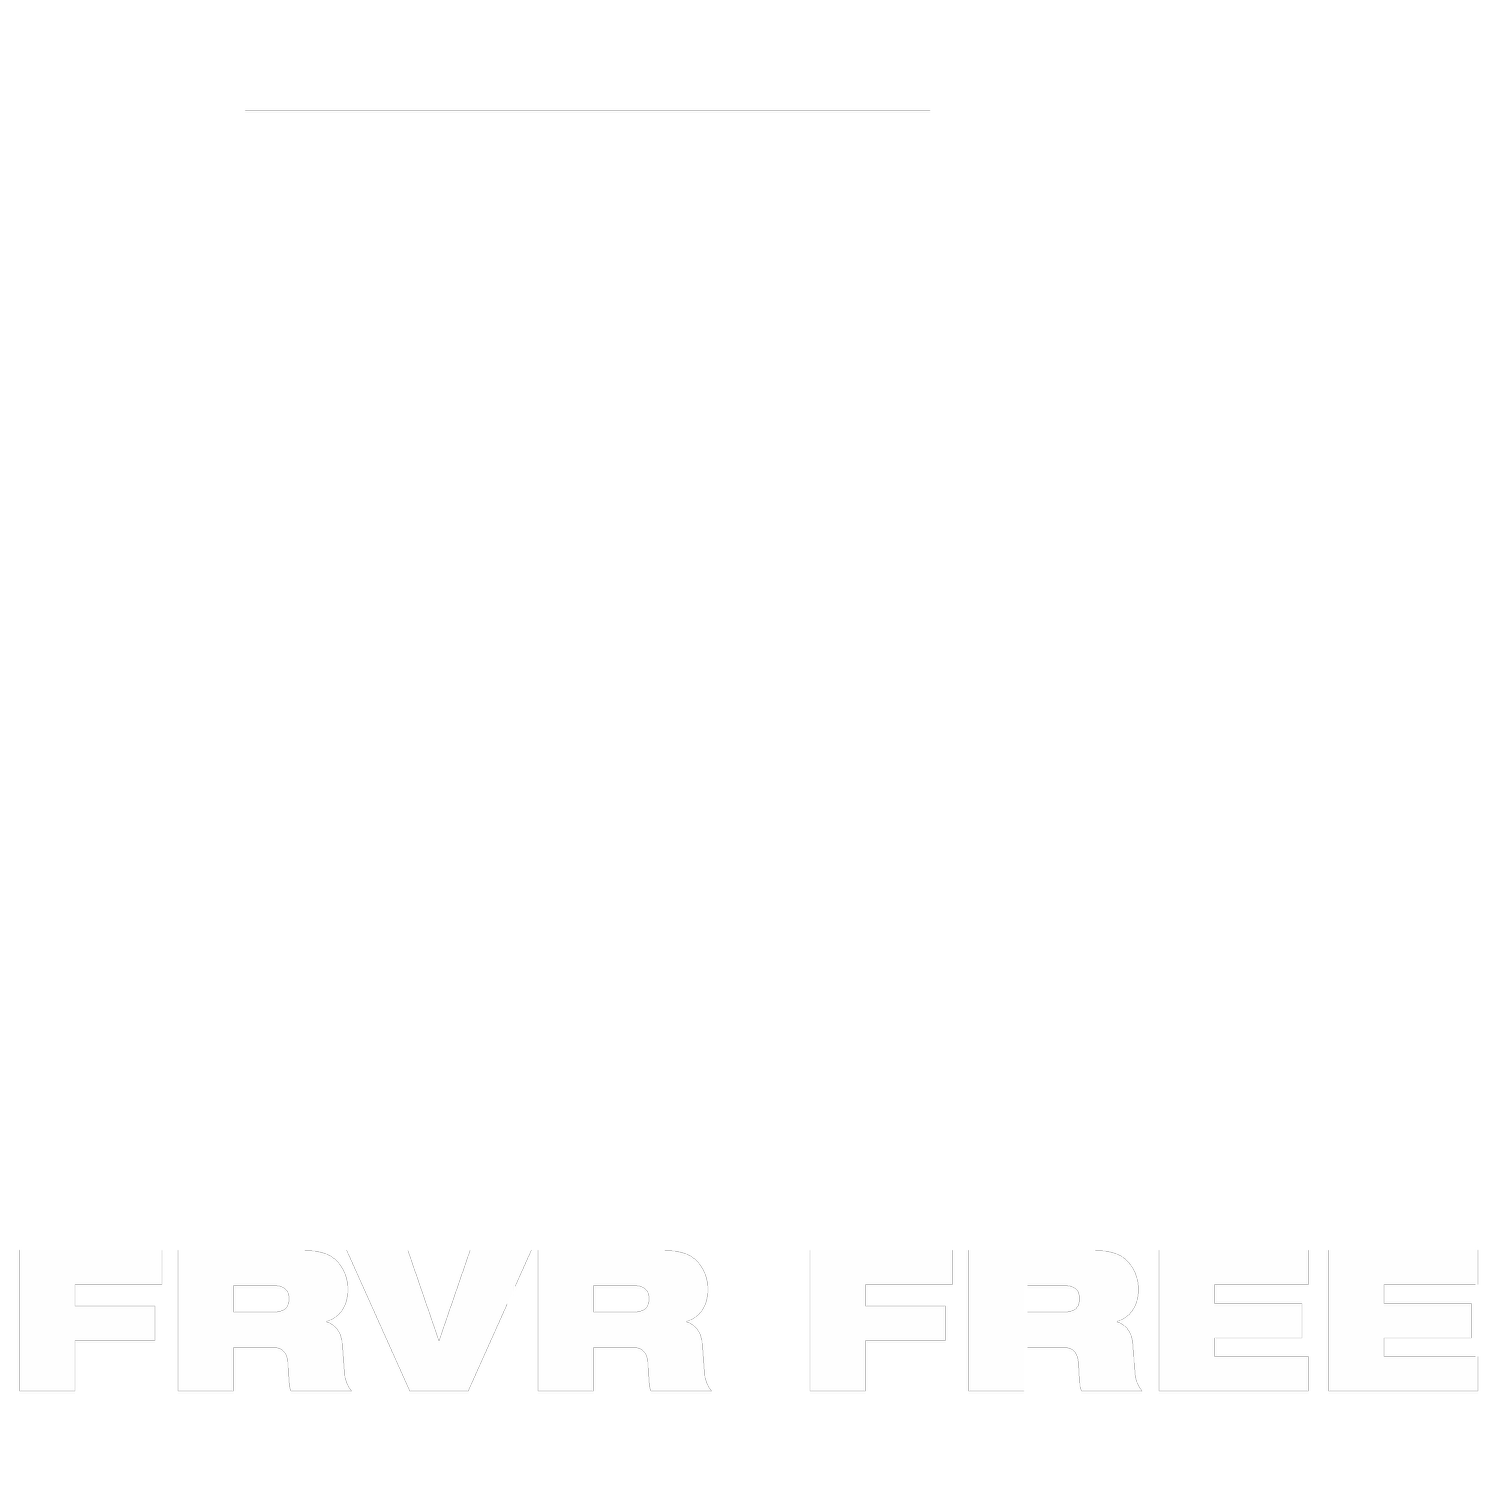 FRVR FREE